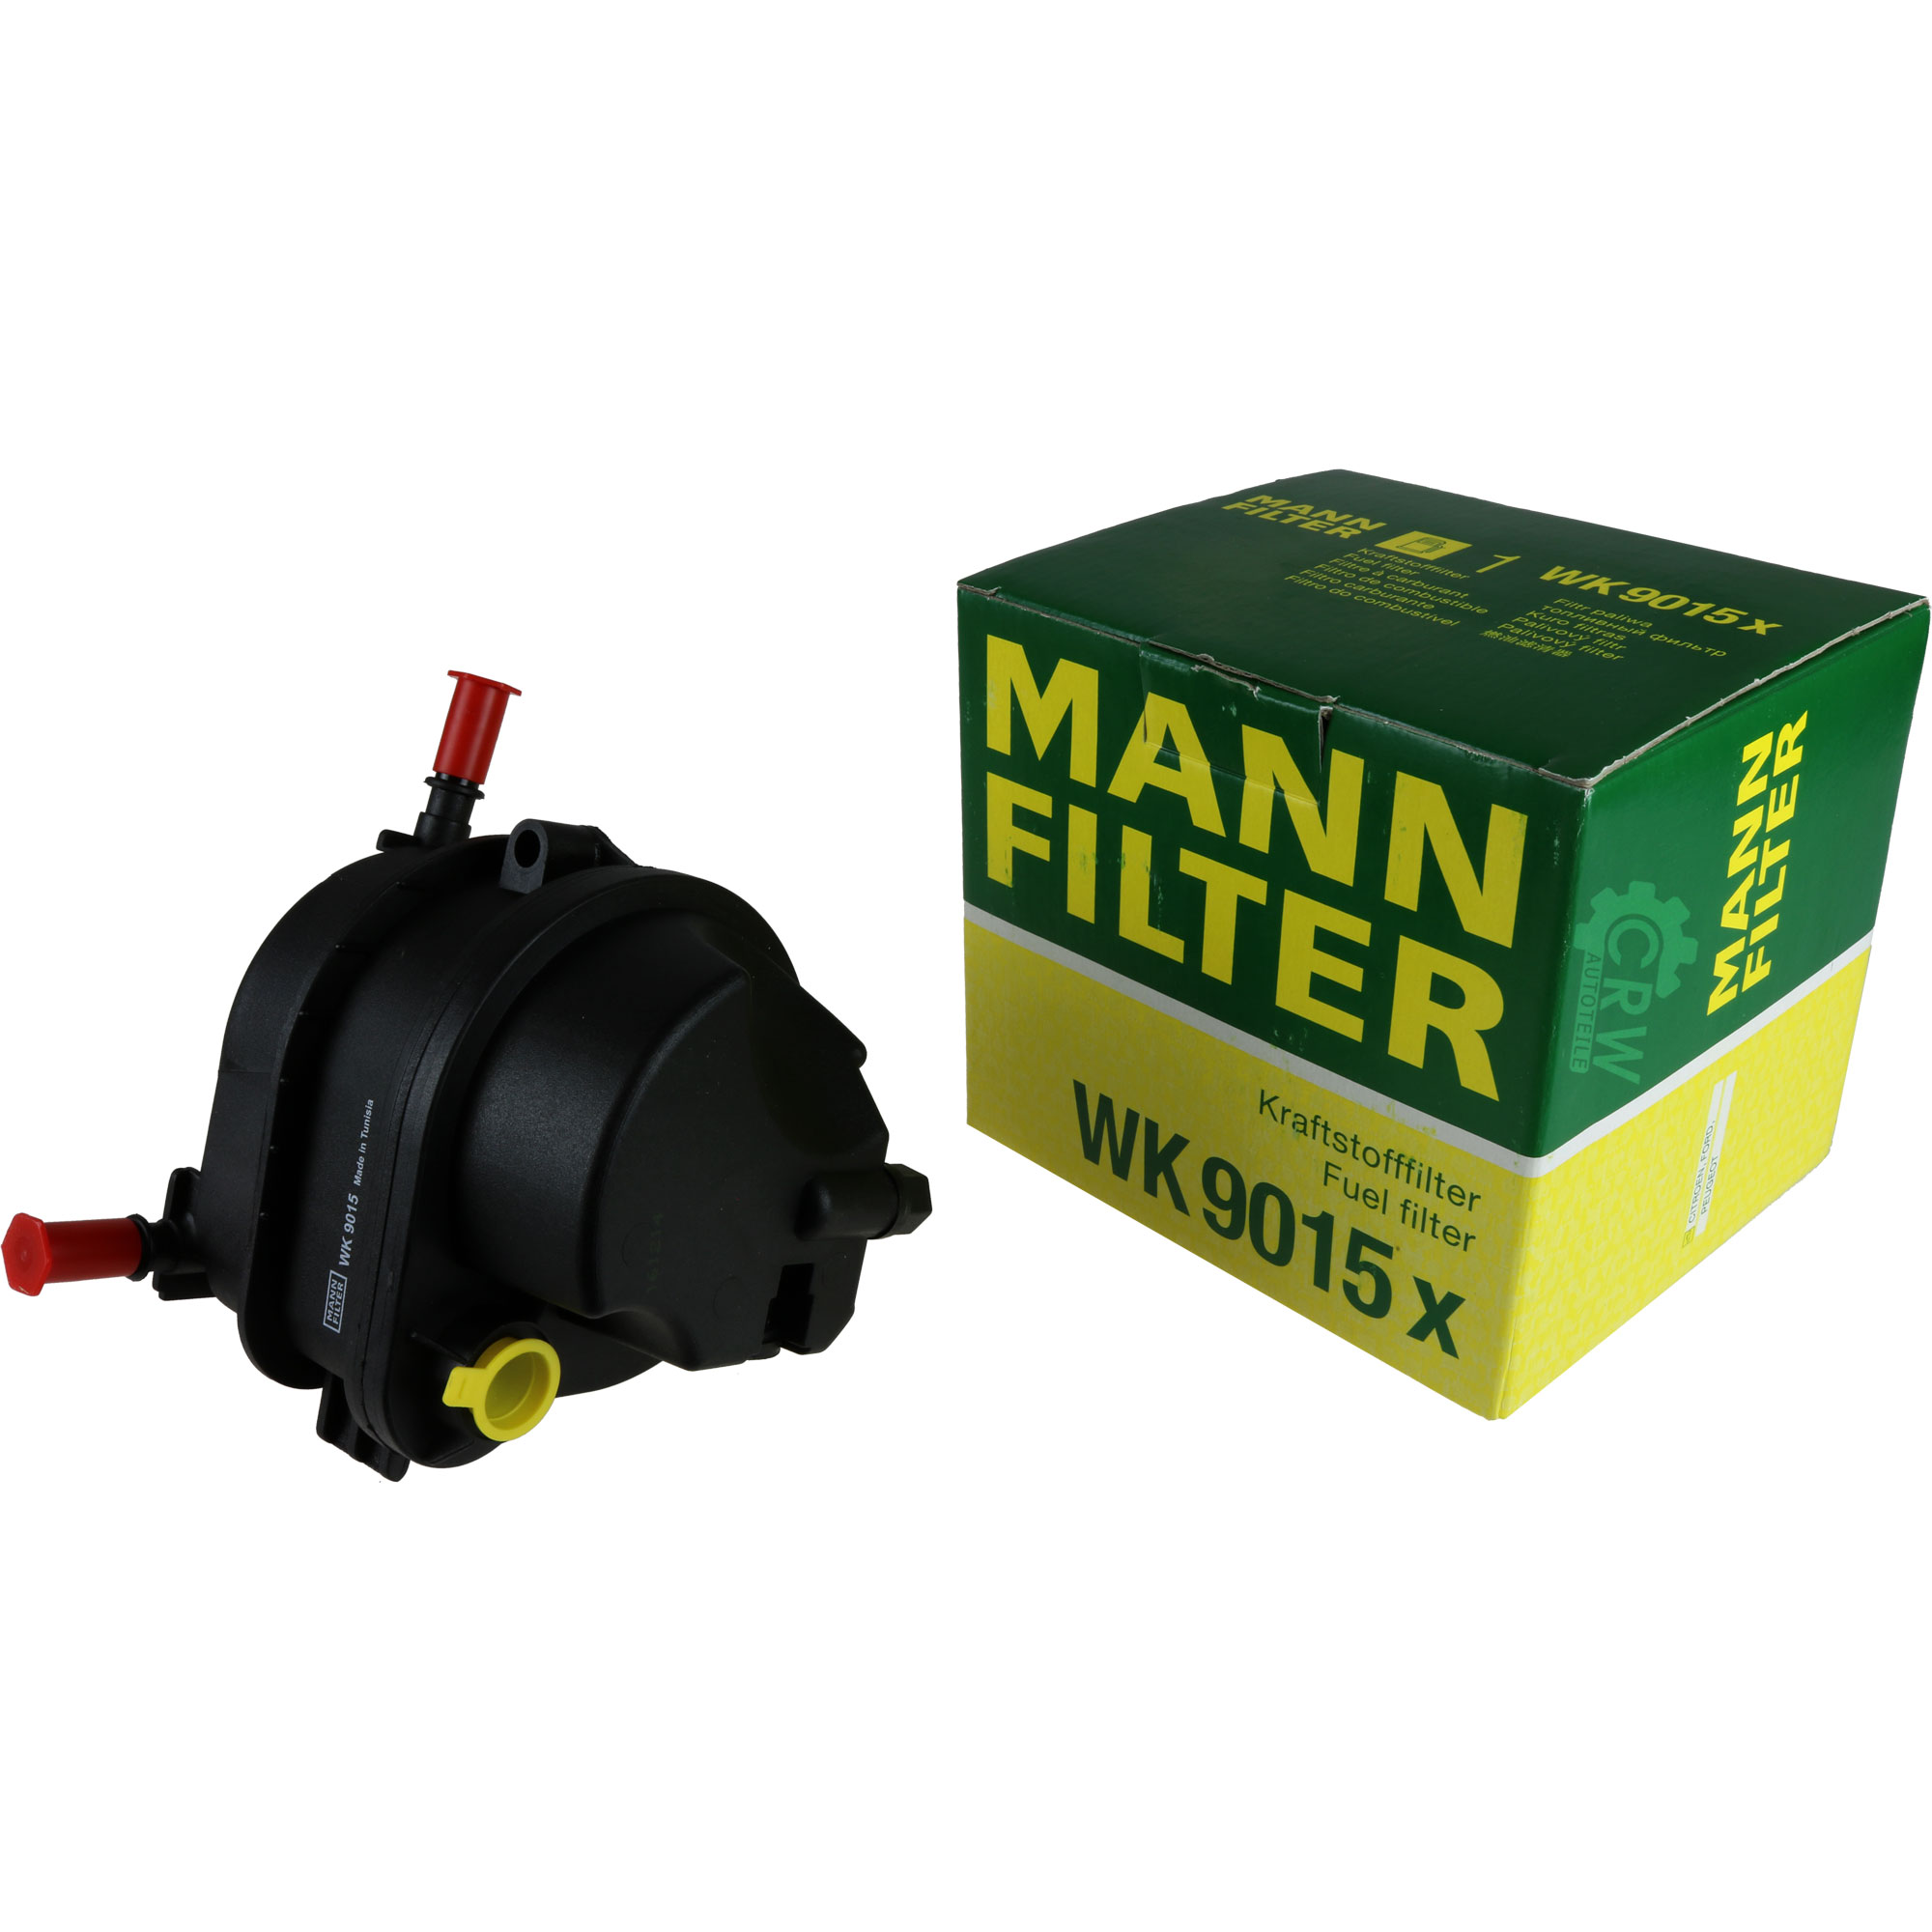 MANN-FILTER Kraftstofffilter WK 9015 x Fuel Filter